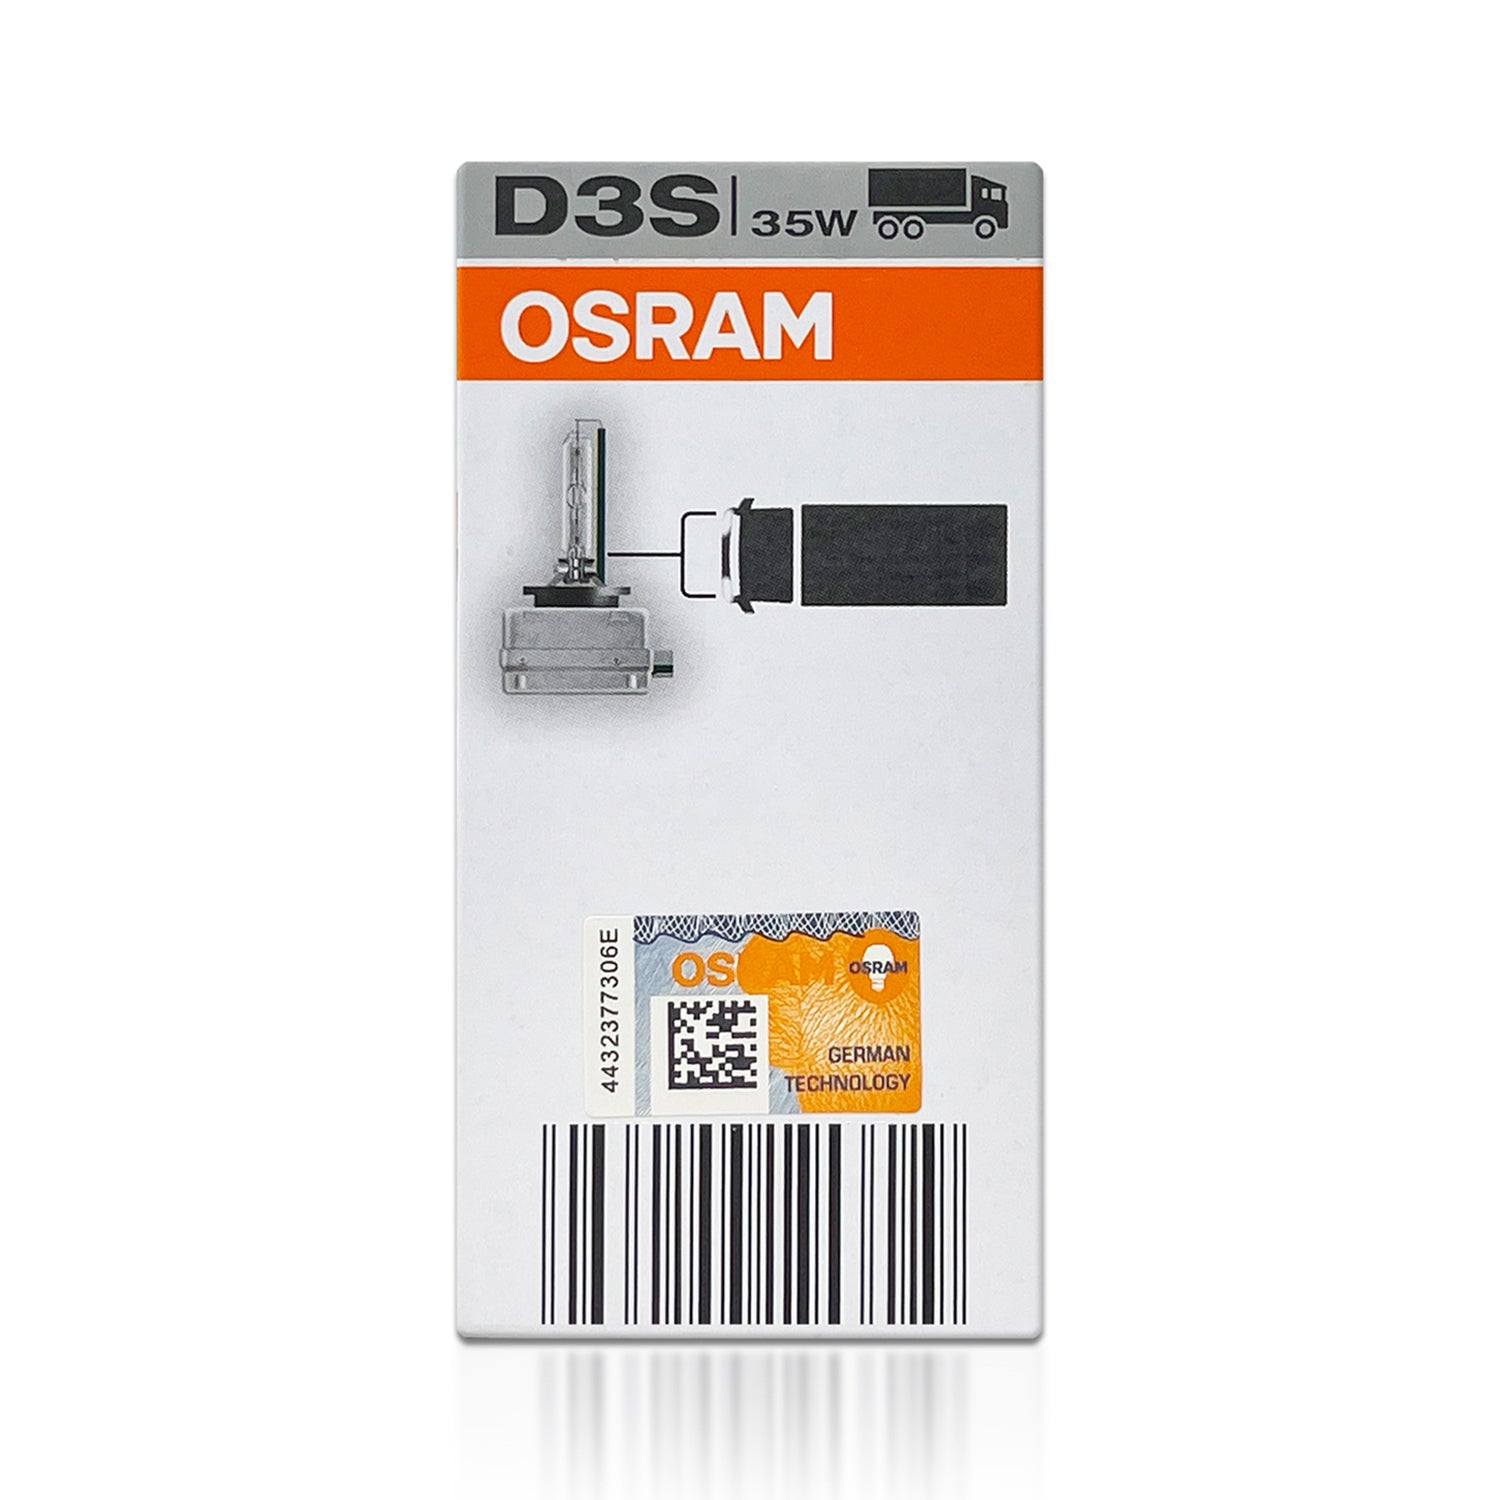 OSRAM Xenarc D3S Xenon HID Bulbs (Single)